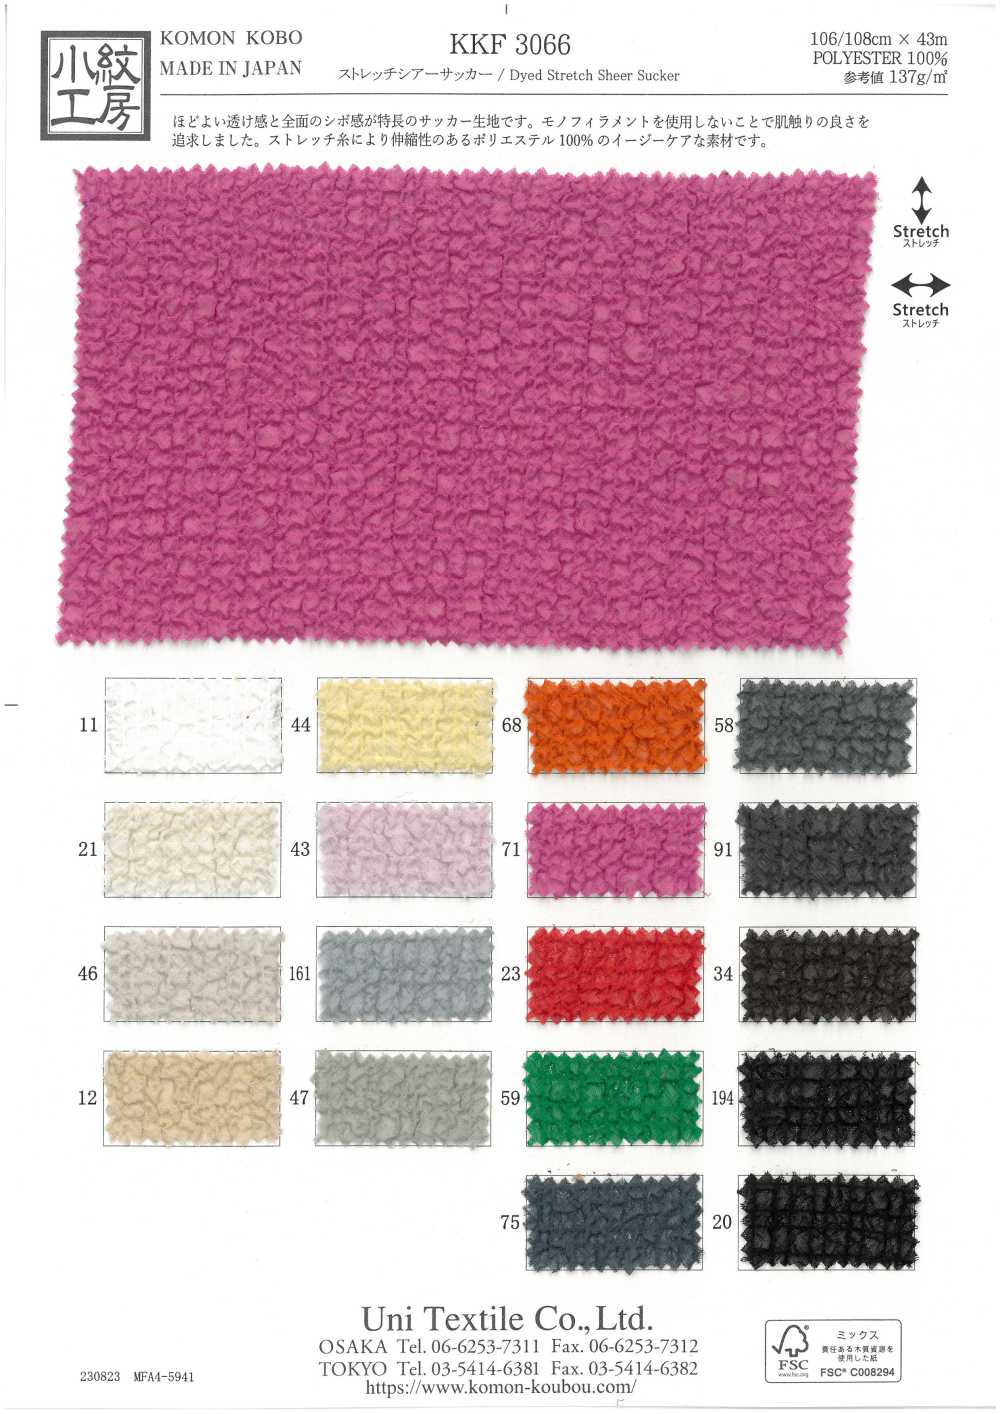 KKF3066 Co Giãn Vải Sọc Nhăn Uni Textile